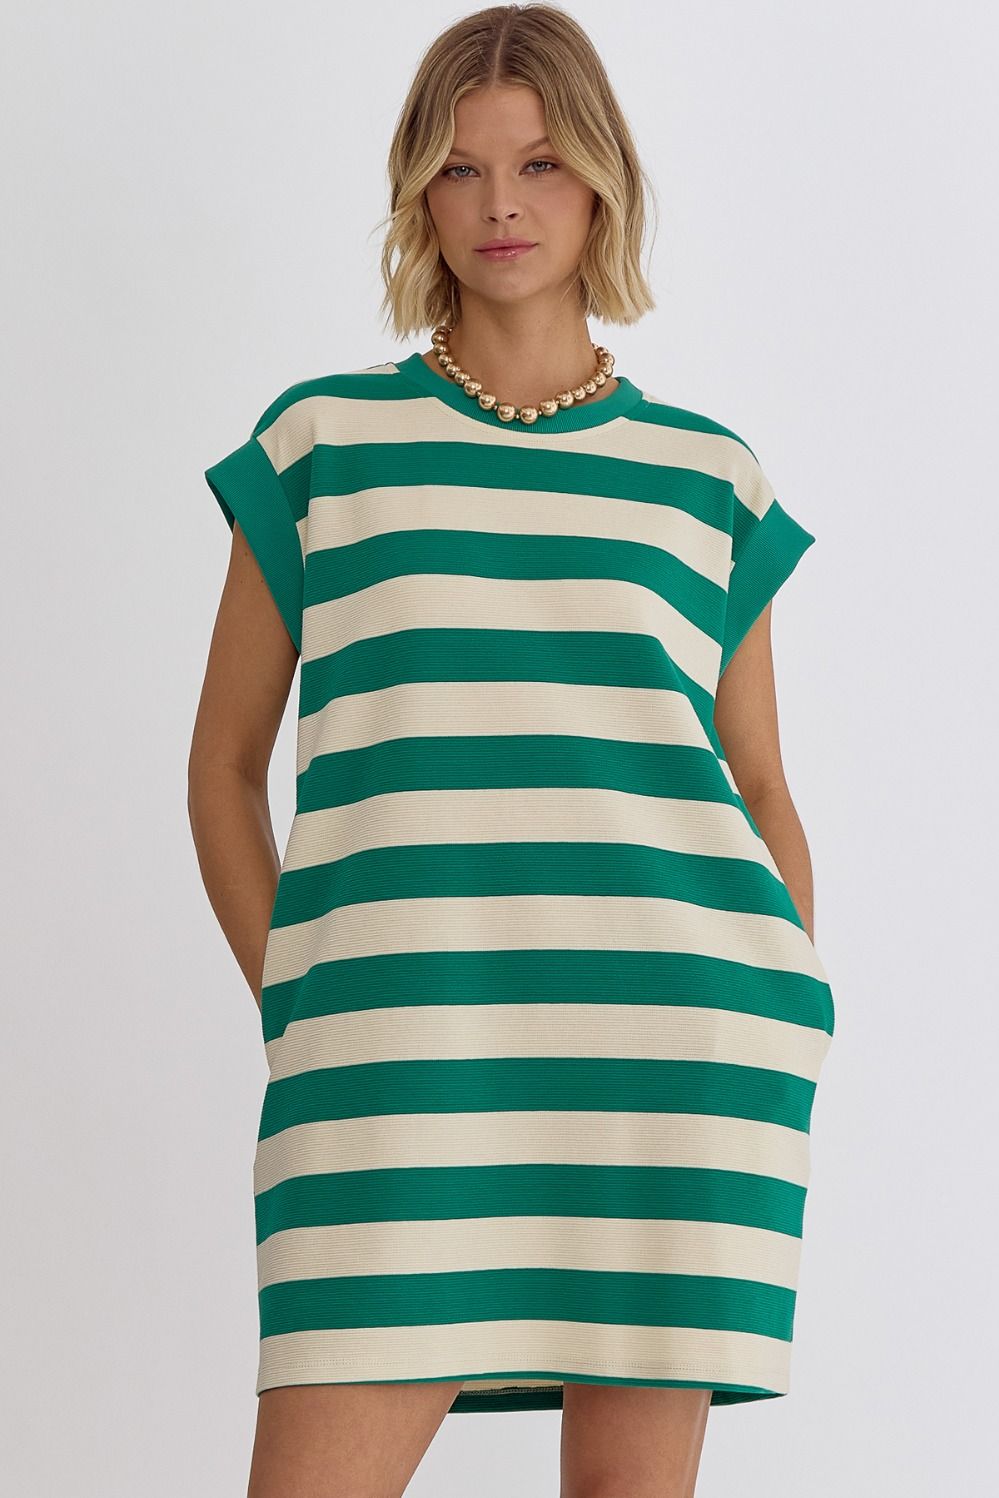 Sally Striped Dress